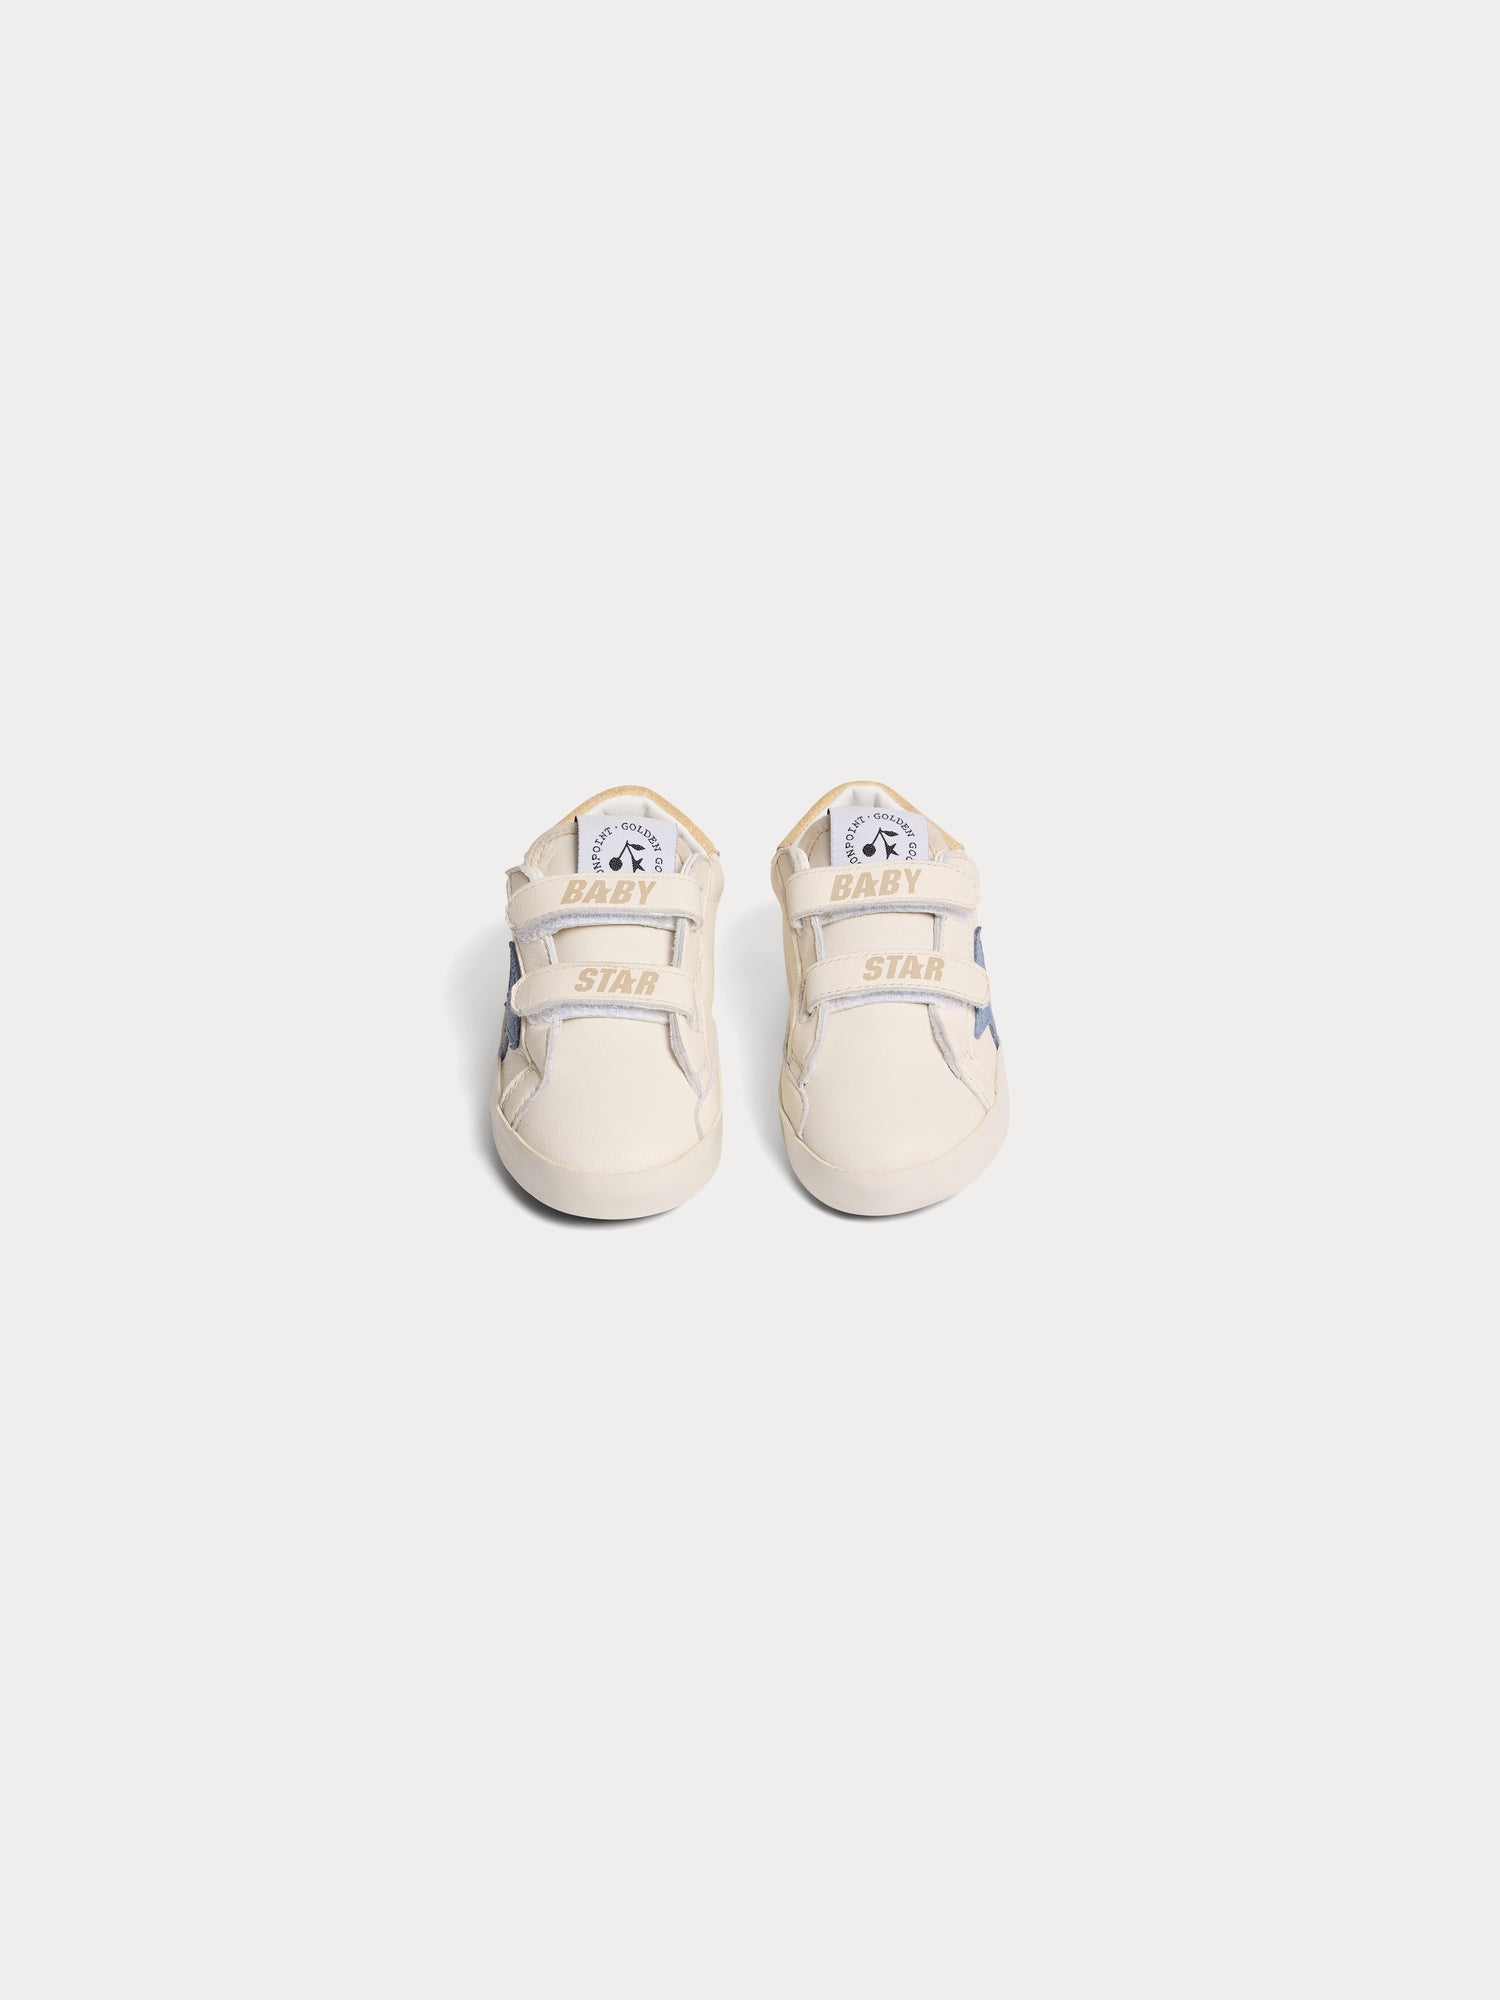 Baby Boys & Girls White Shoes(Bonpoint x Golden Goose)